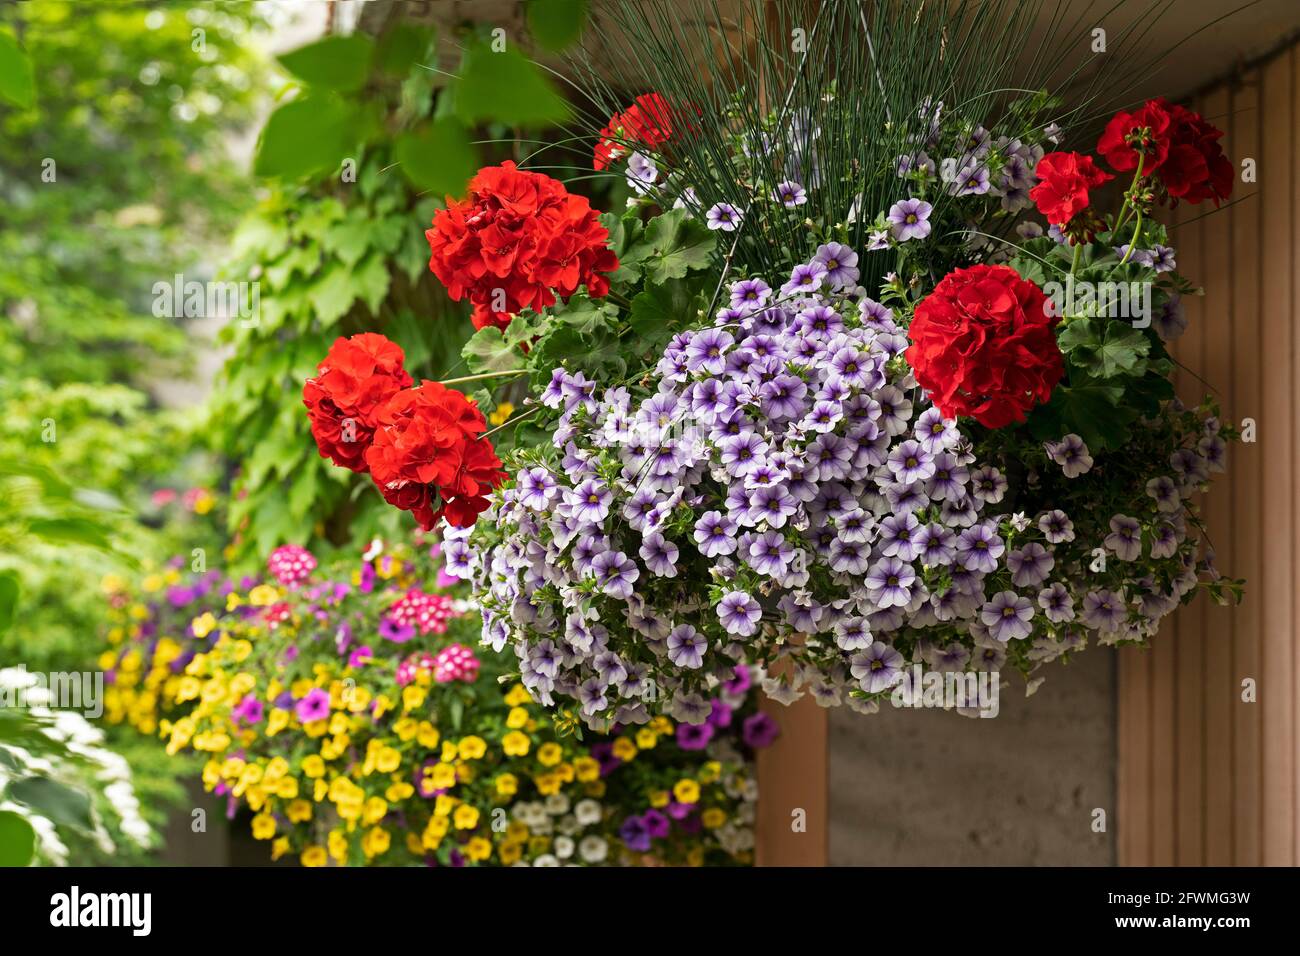 Petunias and Geraniums in a Hanging Basket arrangement of flowers, Hanging Petunia, Geranium Flowers in Spring Stock Photo